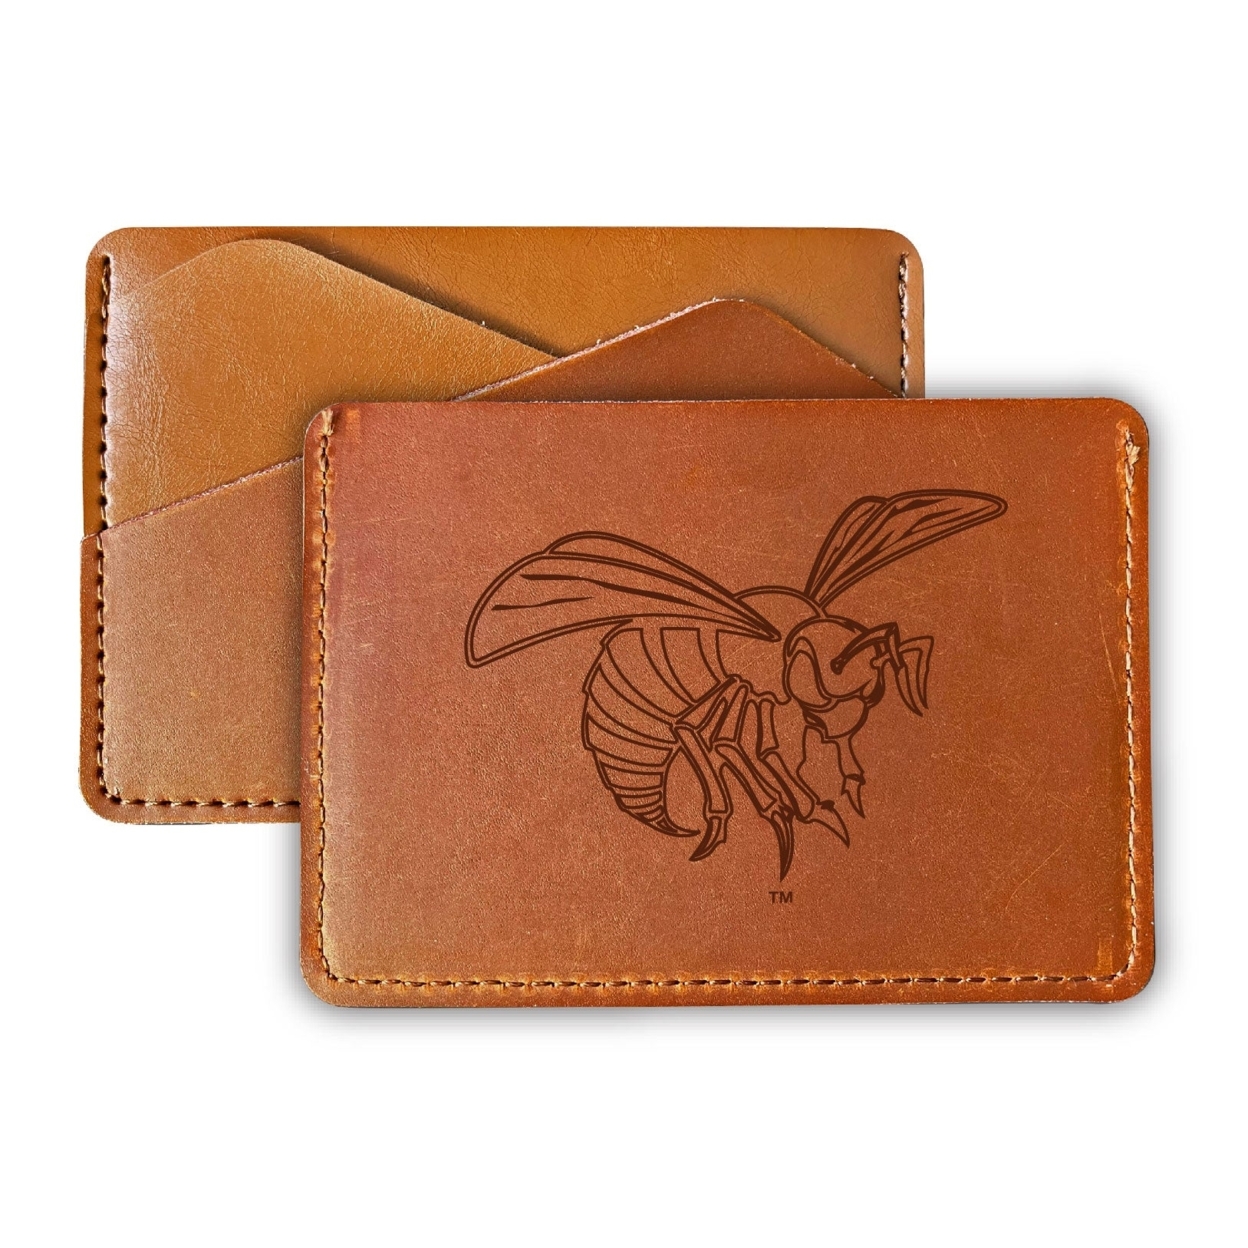 Alabama State University College Leather Card Holder Wallet